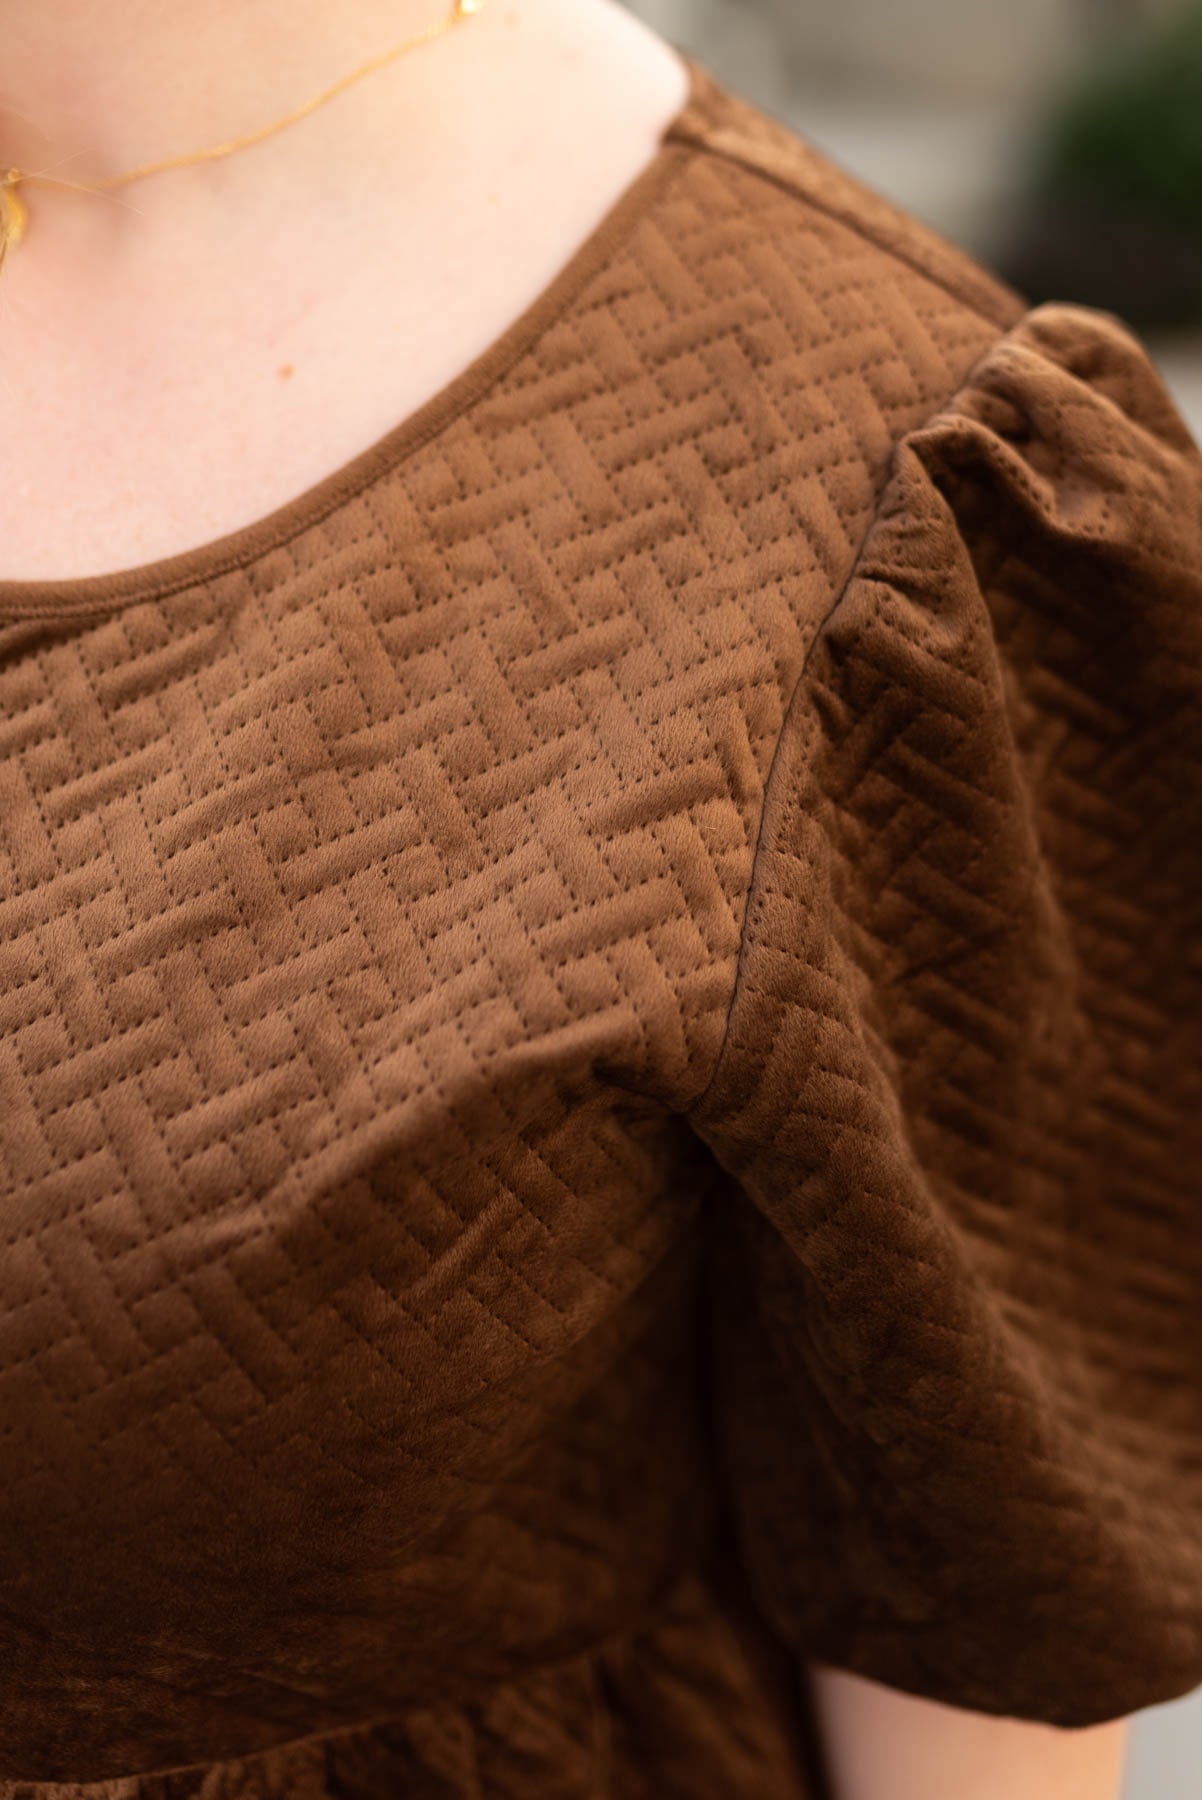 Fabric pattern of the plus size chocolate dress